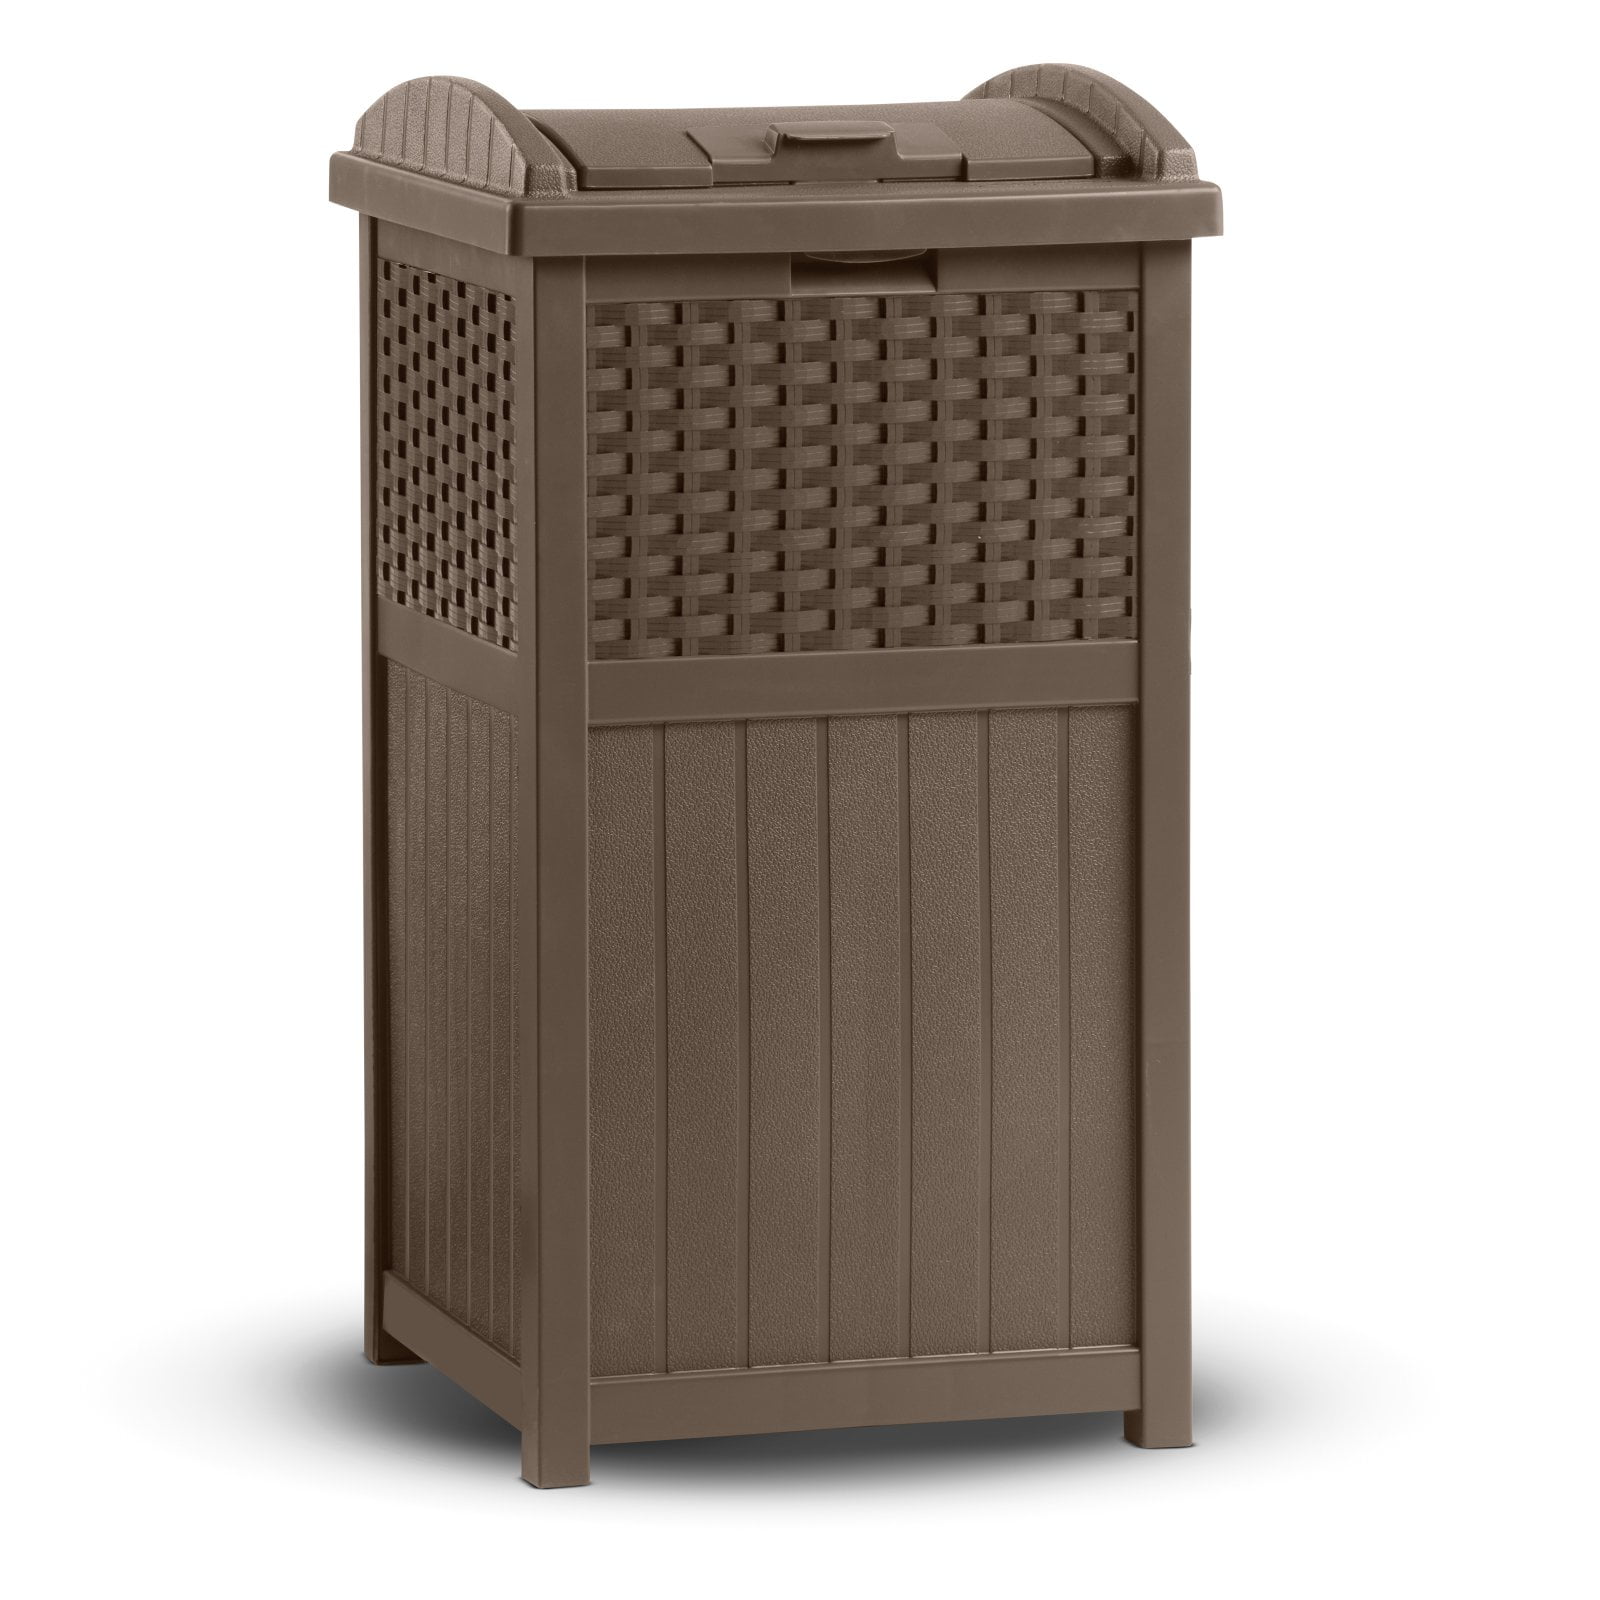 Suncast 33 Gallon Resin Outdoor Hideaway Patio Trash Can